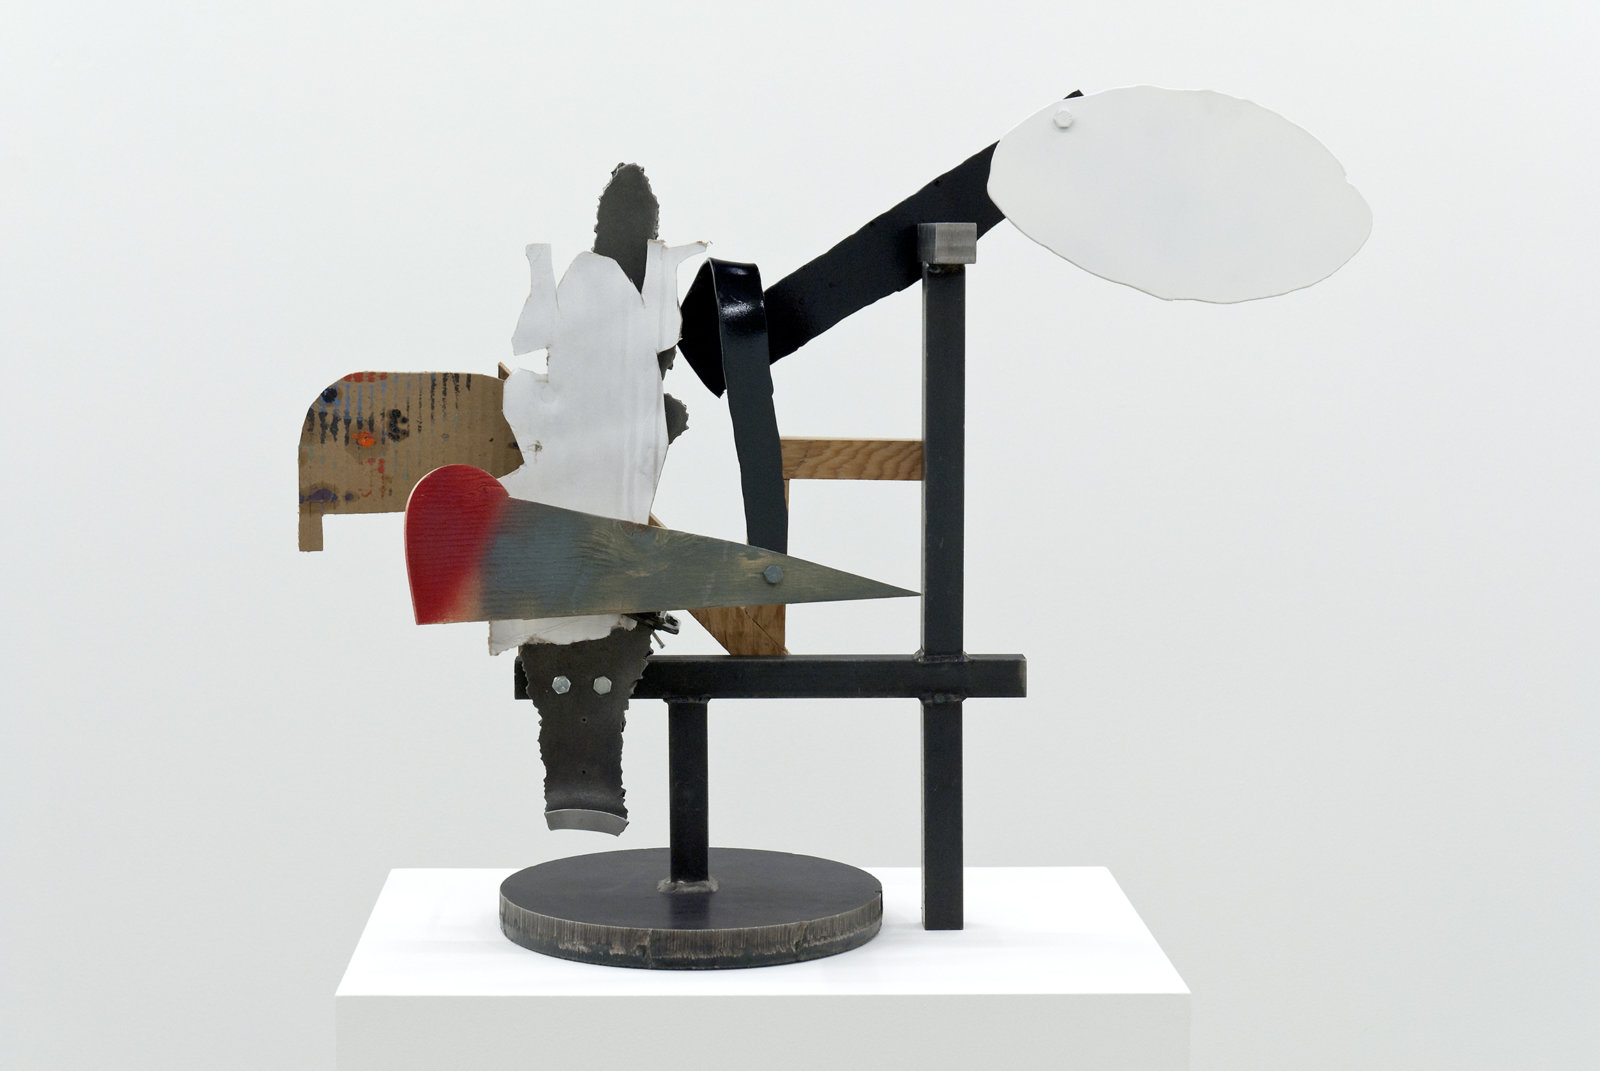 Damian Moppett, Untitled, 2010, steel, wood, cardboard, clamps, 22 x 29 x 8 in. (55 x 72 x 20 cm)